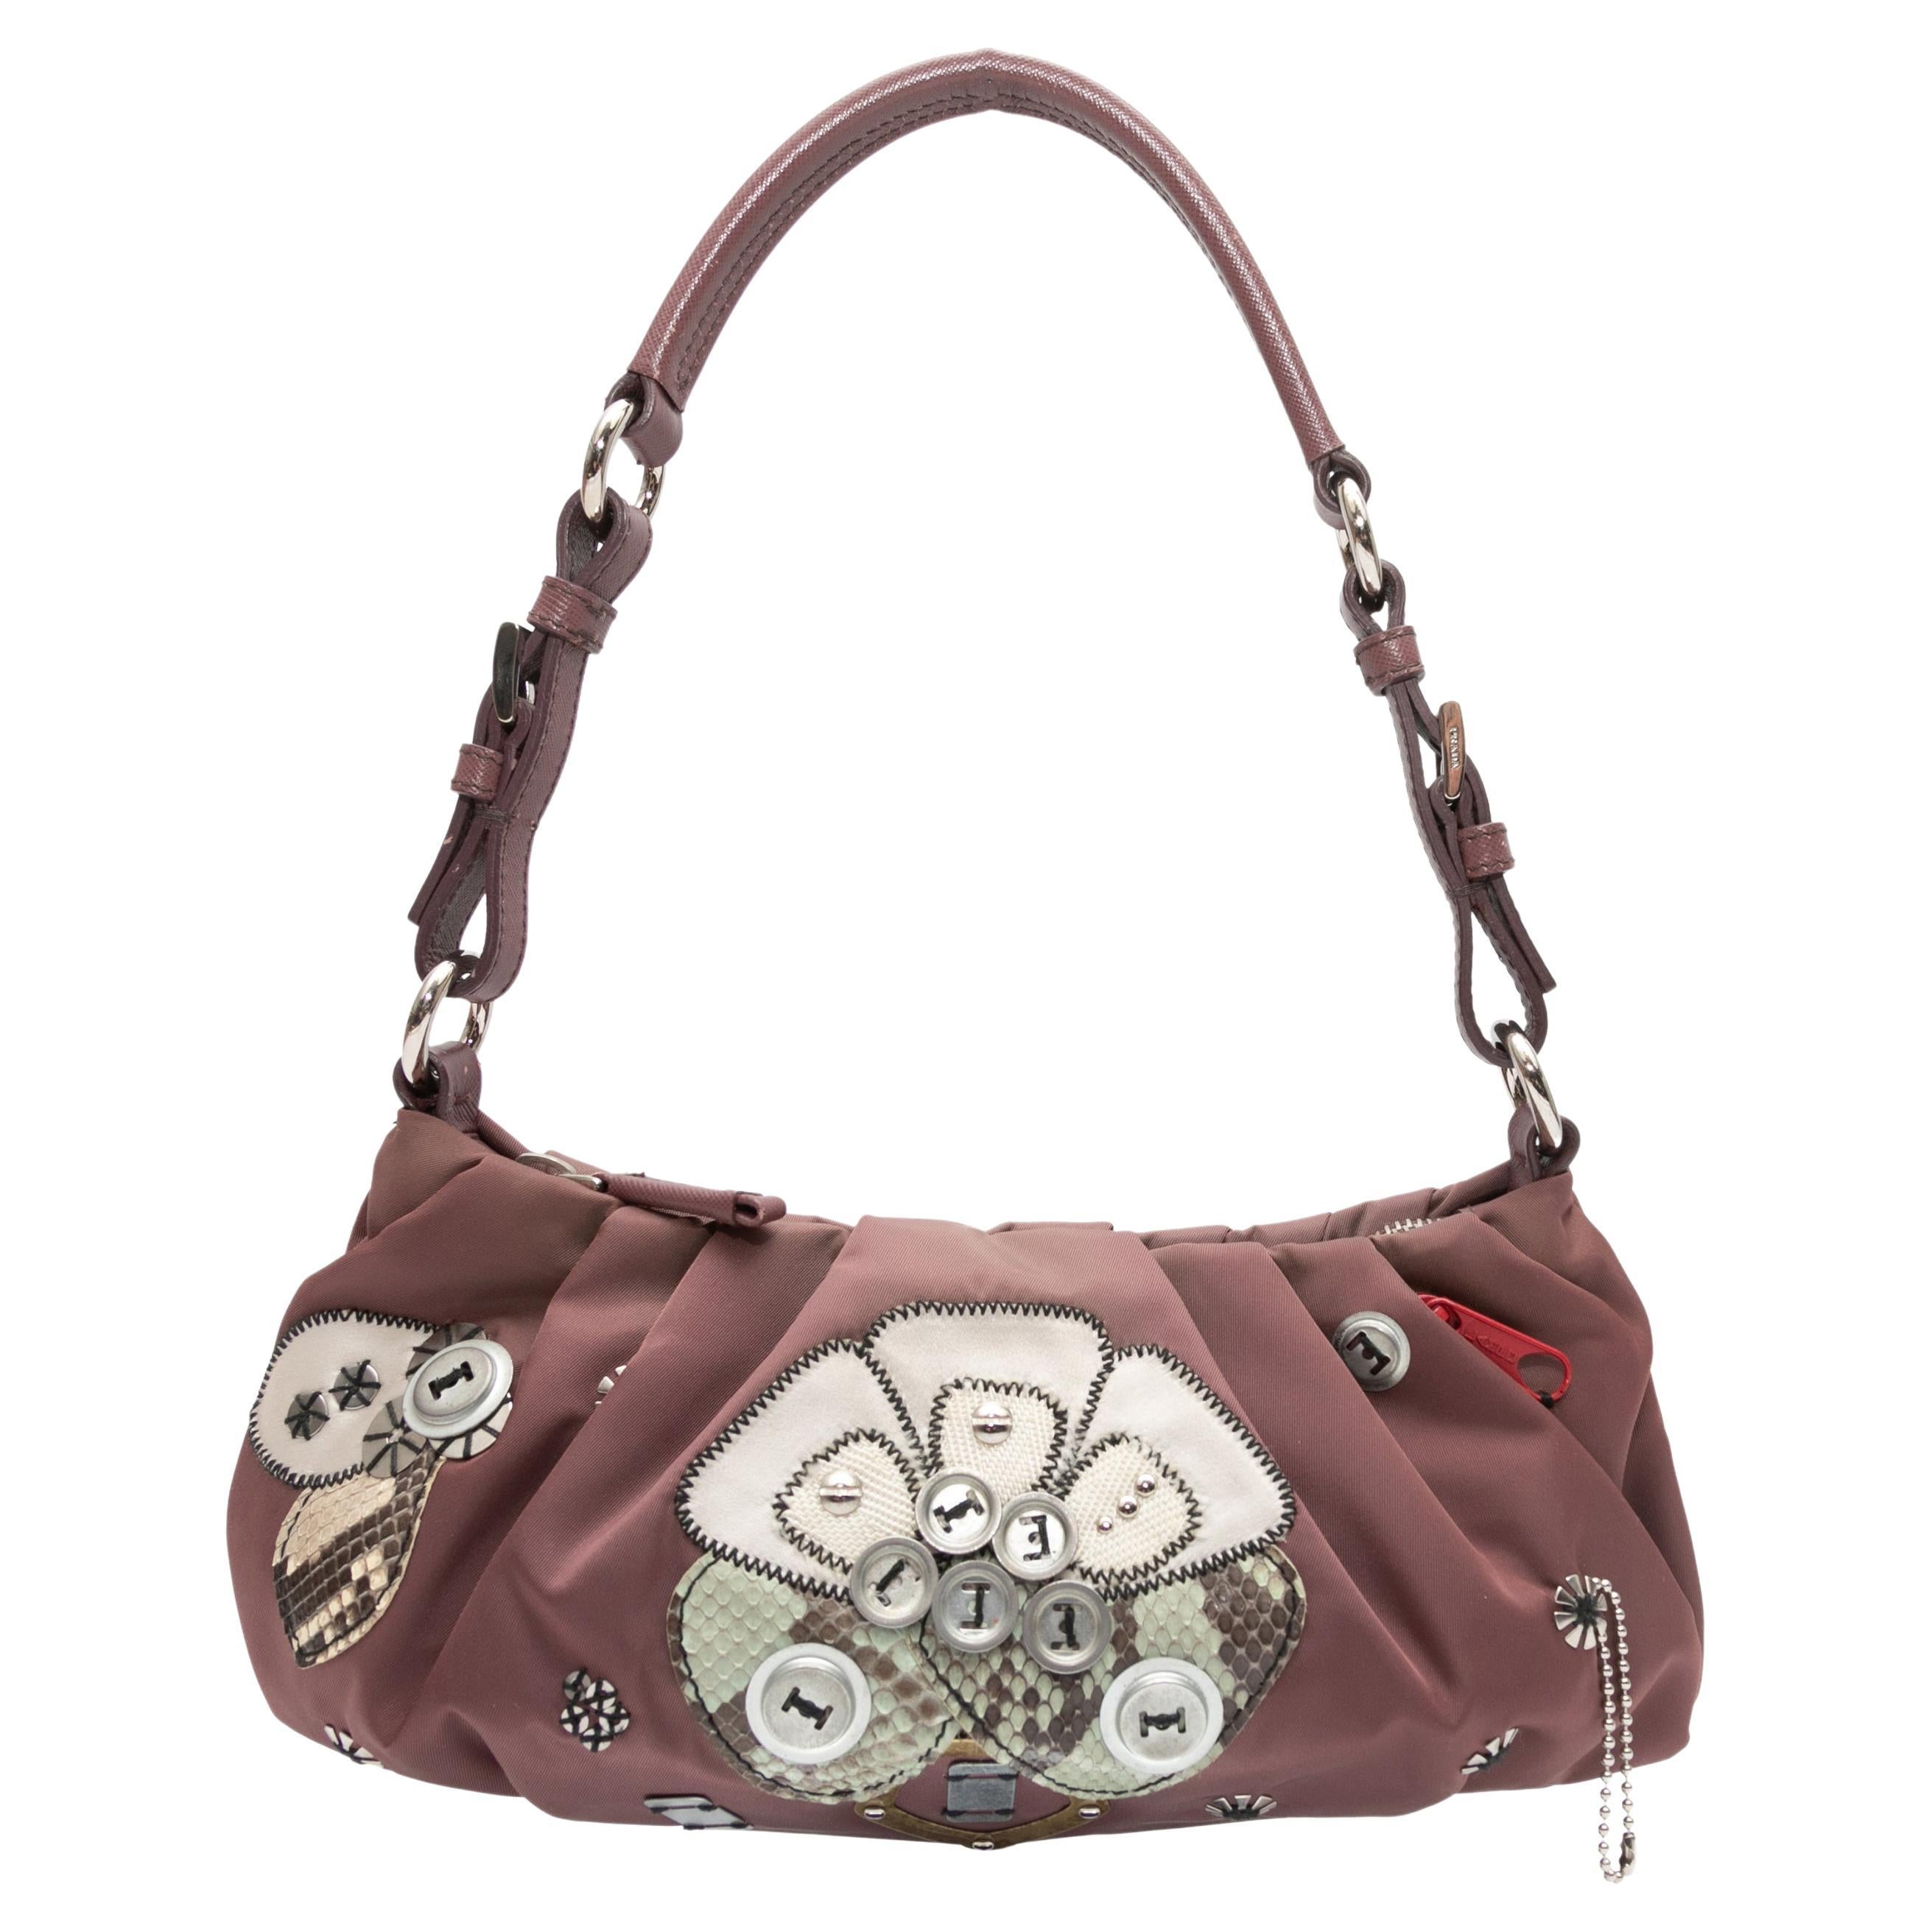 Prada - Authenticated Saffiano Handbag - Leather Brown Plain for Women, Good Condition